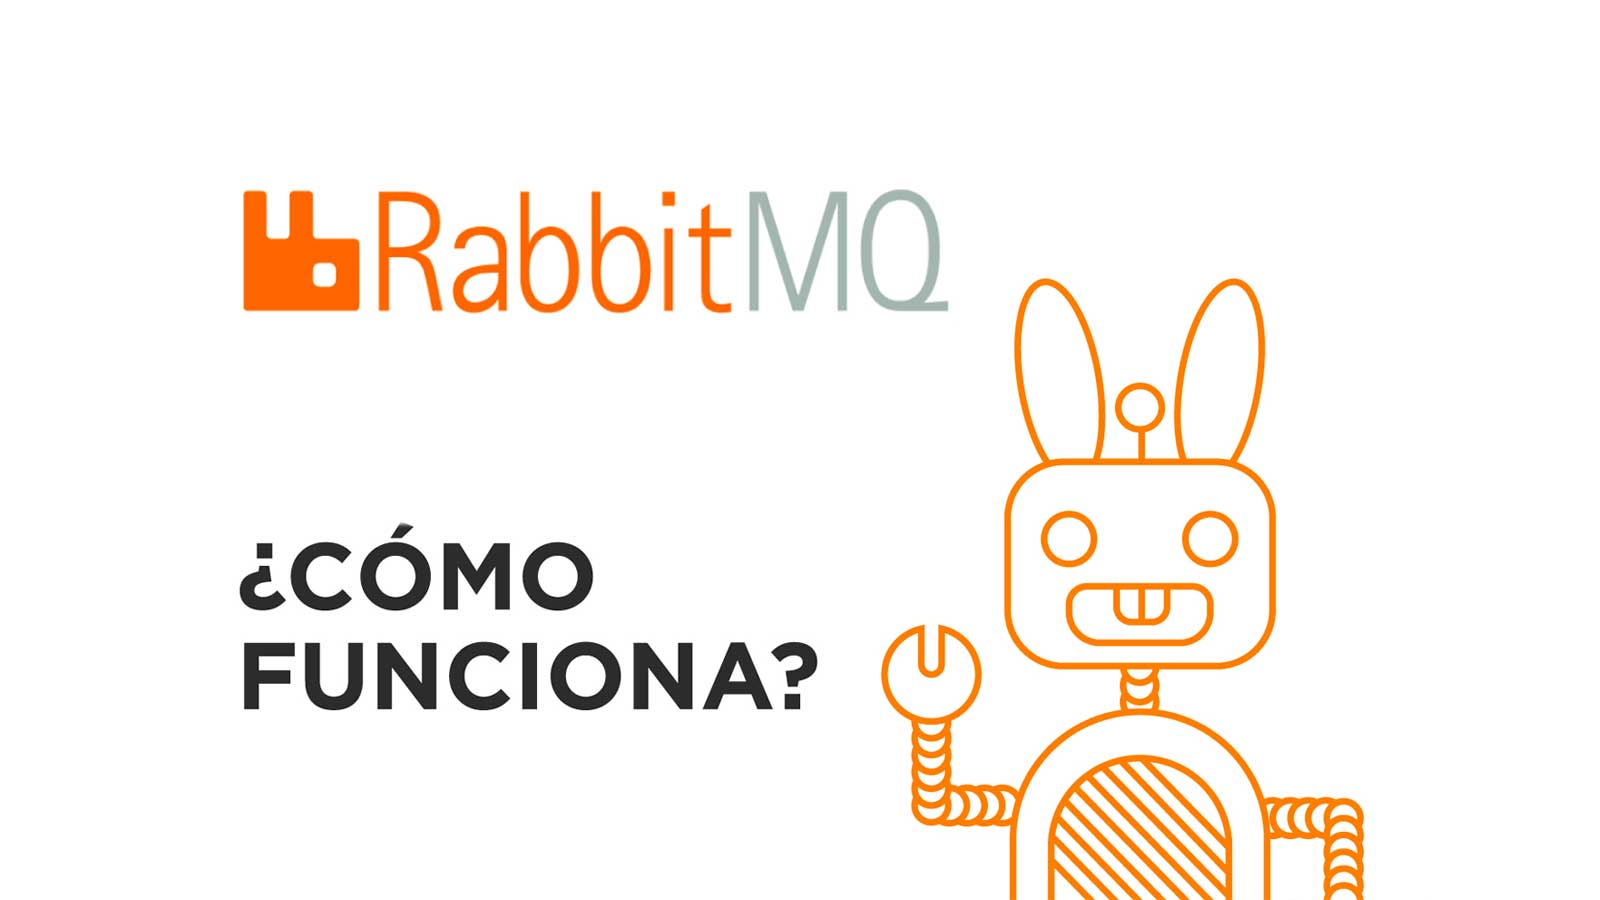 使用 RabbitMQ Pyhon 模块和 Java 模块进行数据交互